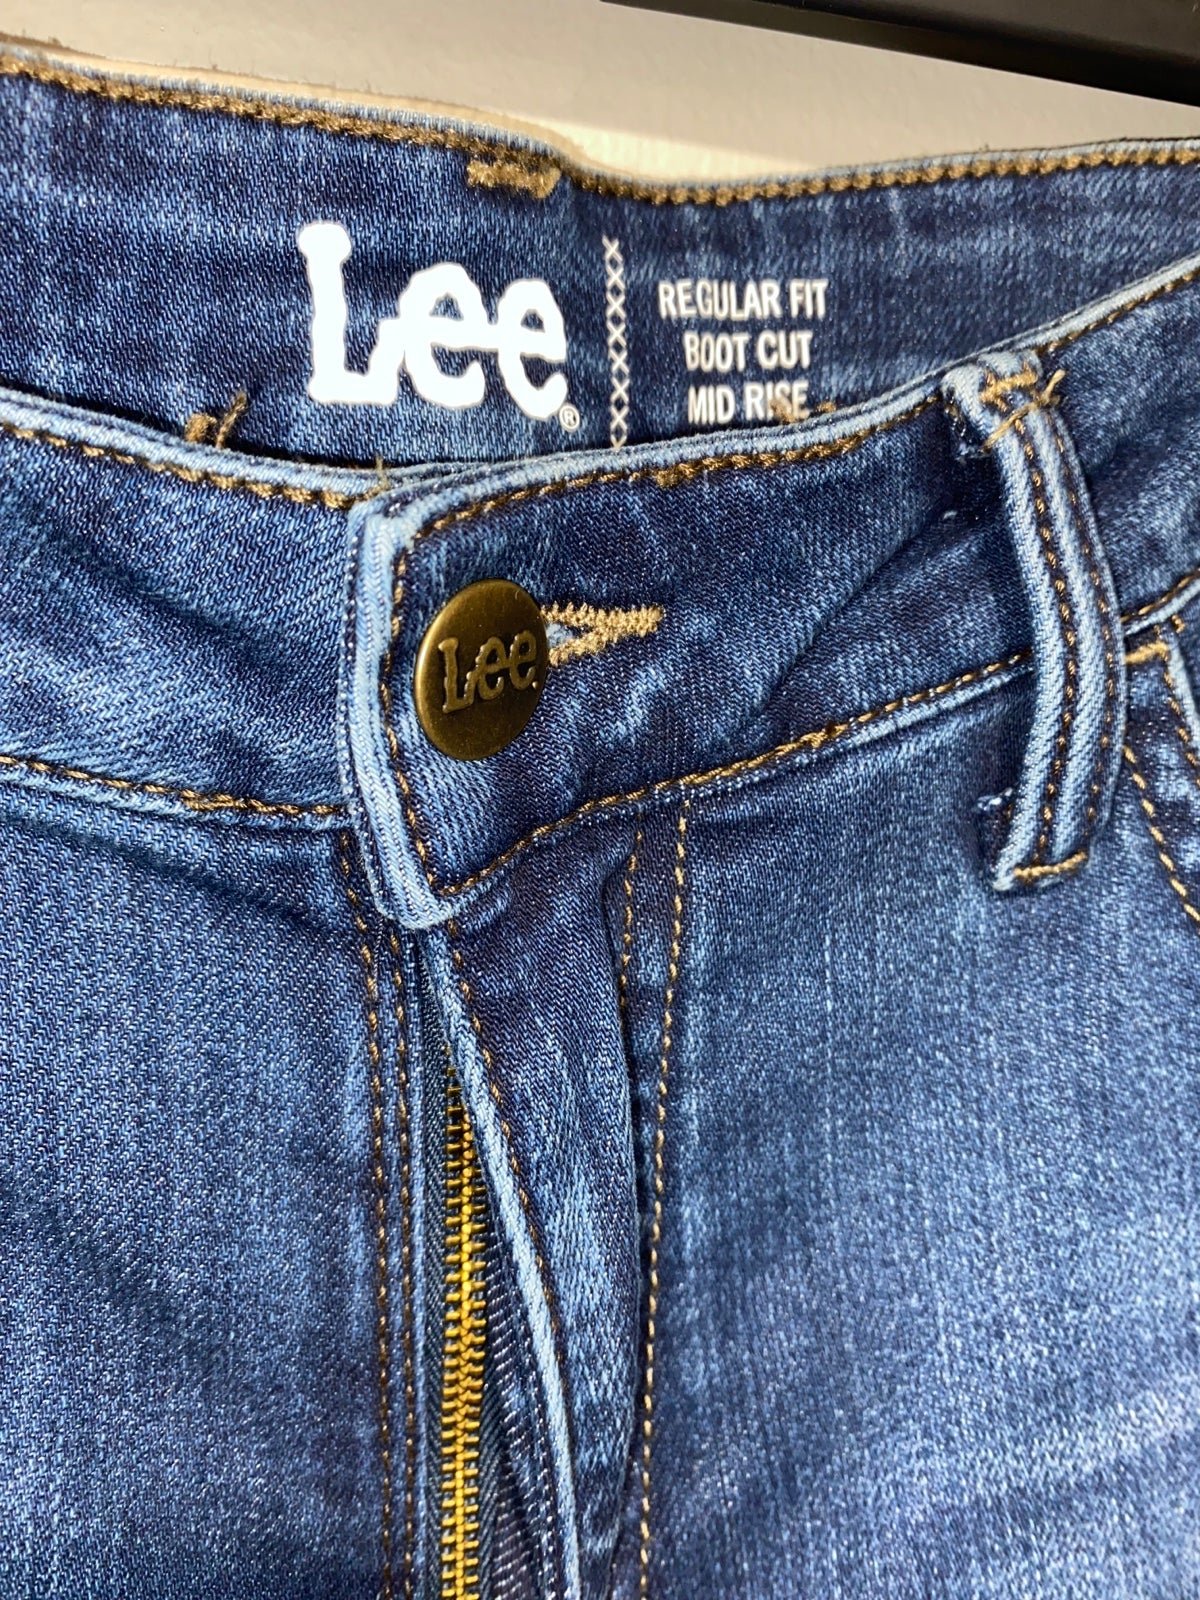 Special offer  NWT Lee Womens Regular Fit Bootcut Midrise Jeans, Sz 12 Medium KmF9ffzZu Cool